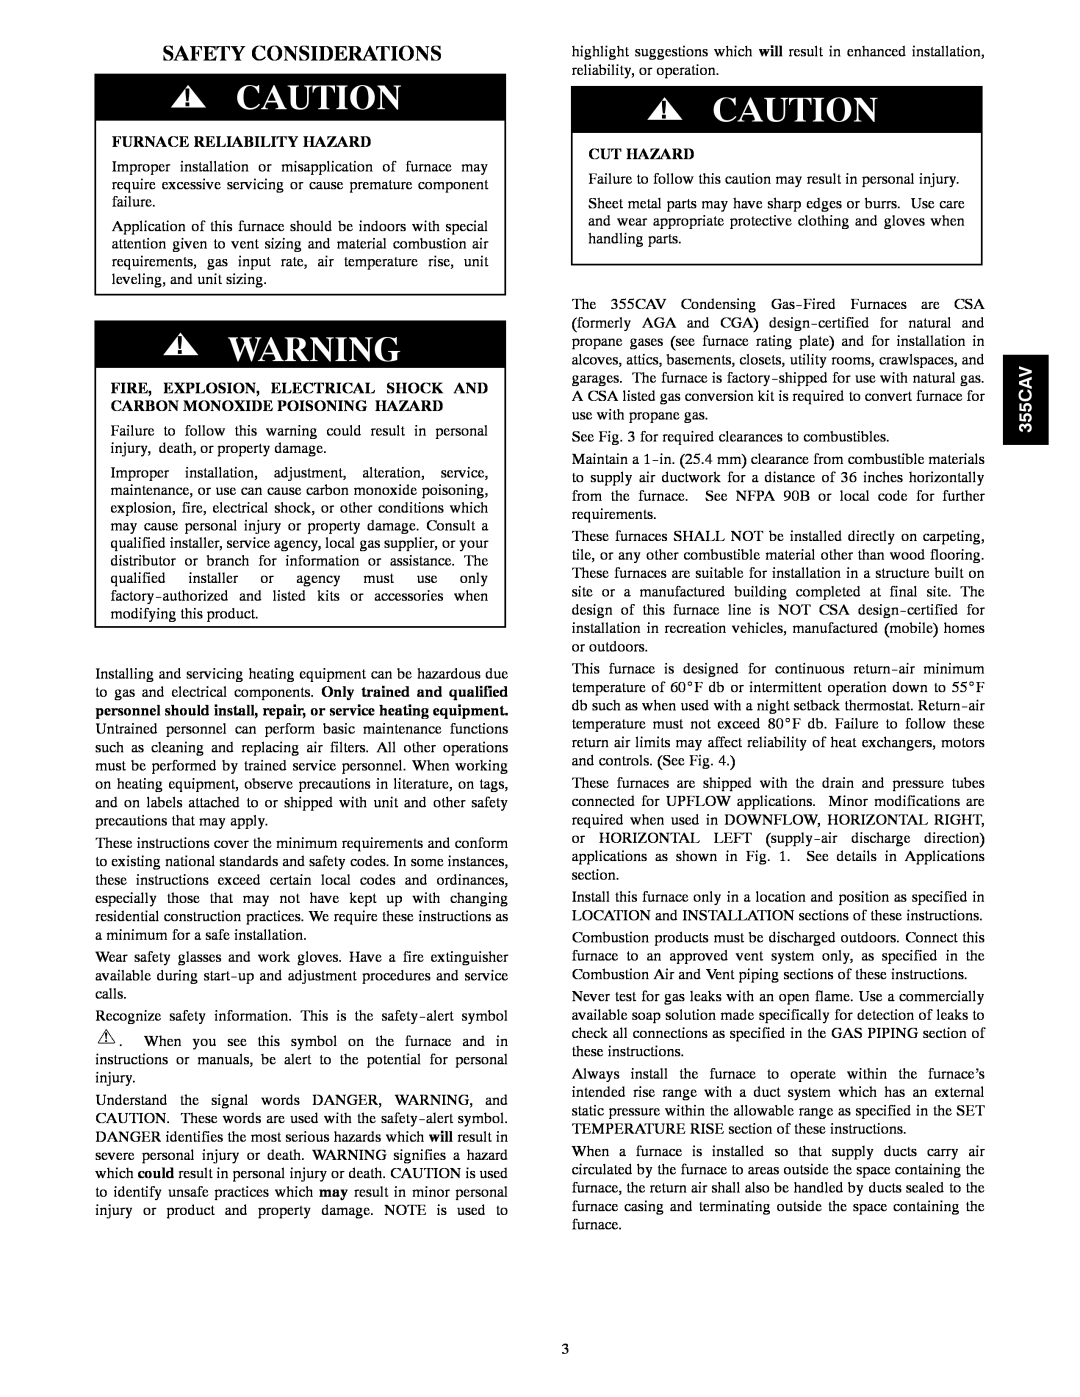 Bryant 355CAV installation instructions Safety Considerations, Cut Hazard, Furnace Reliability Hazard 